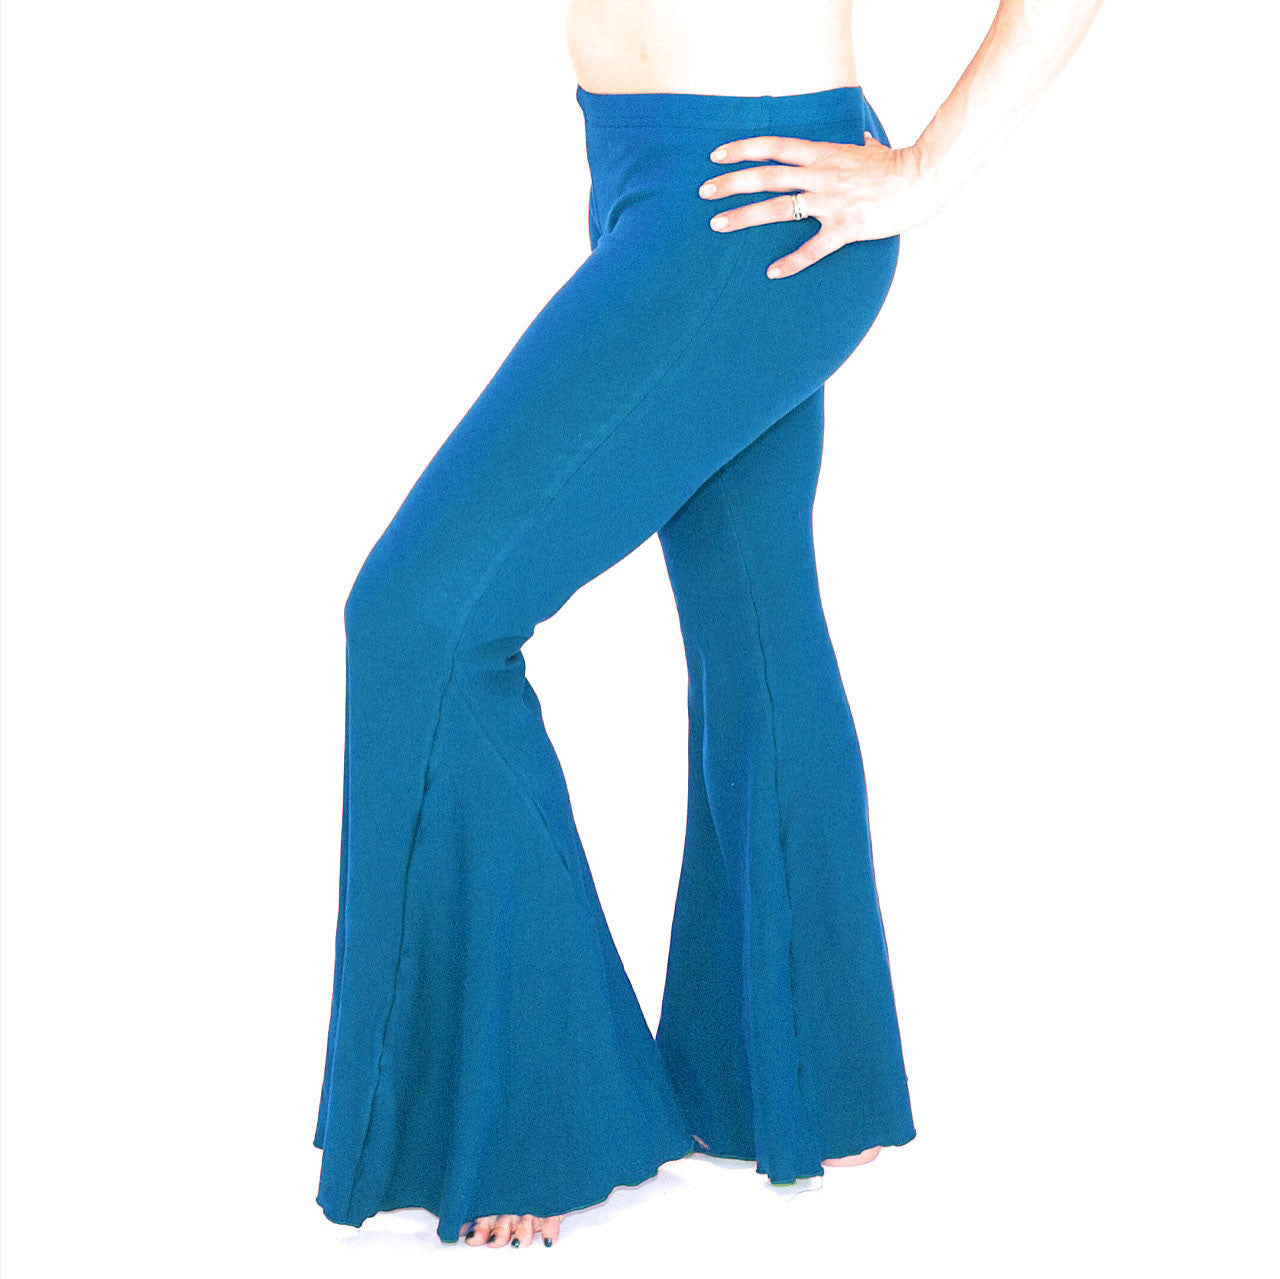 Flared Bottom Yoga Dance Pants - CARIBBEAN BLUE